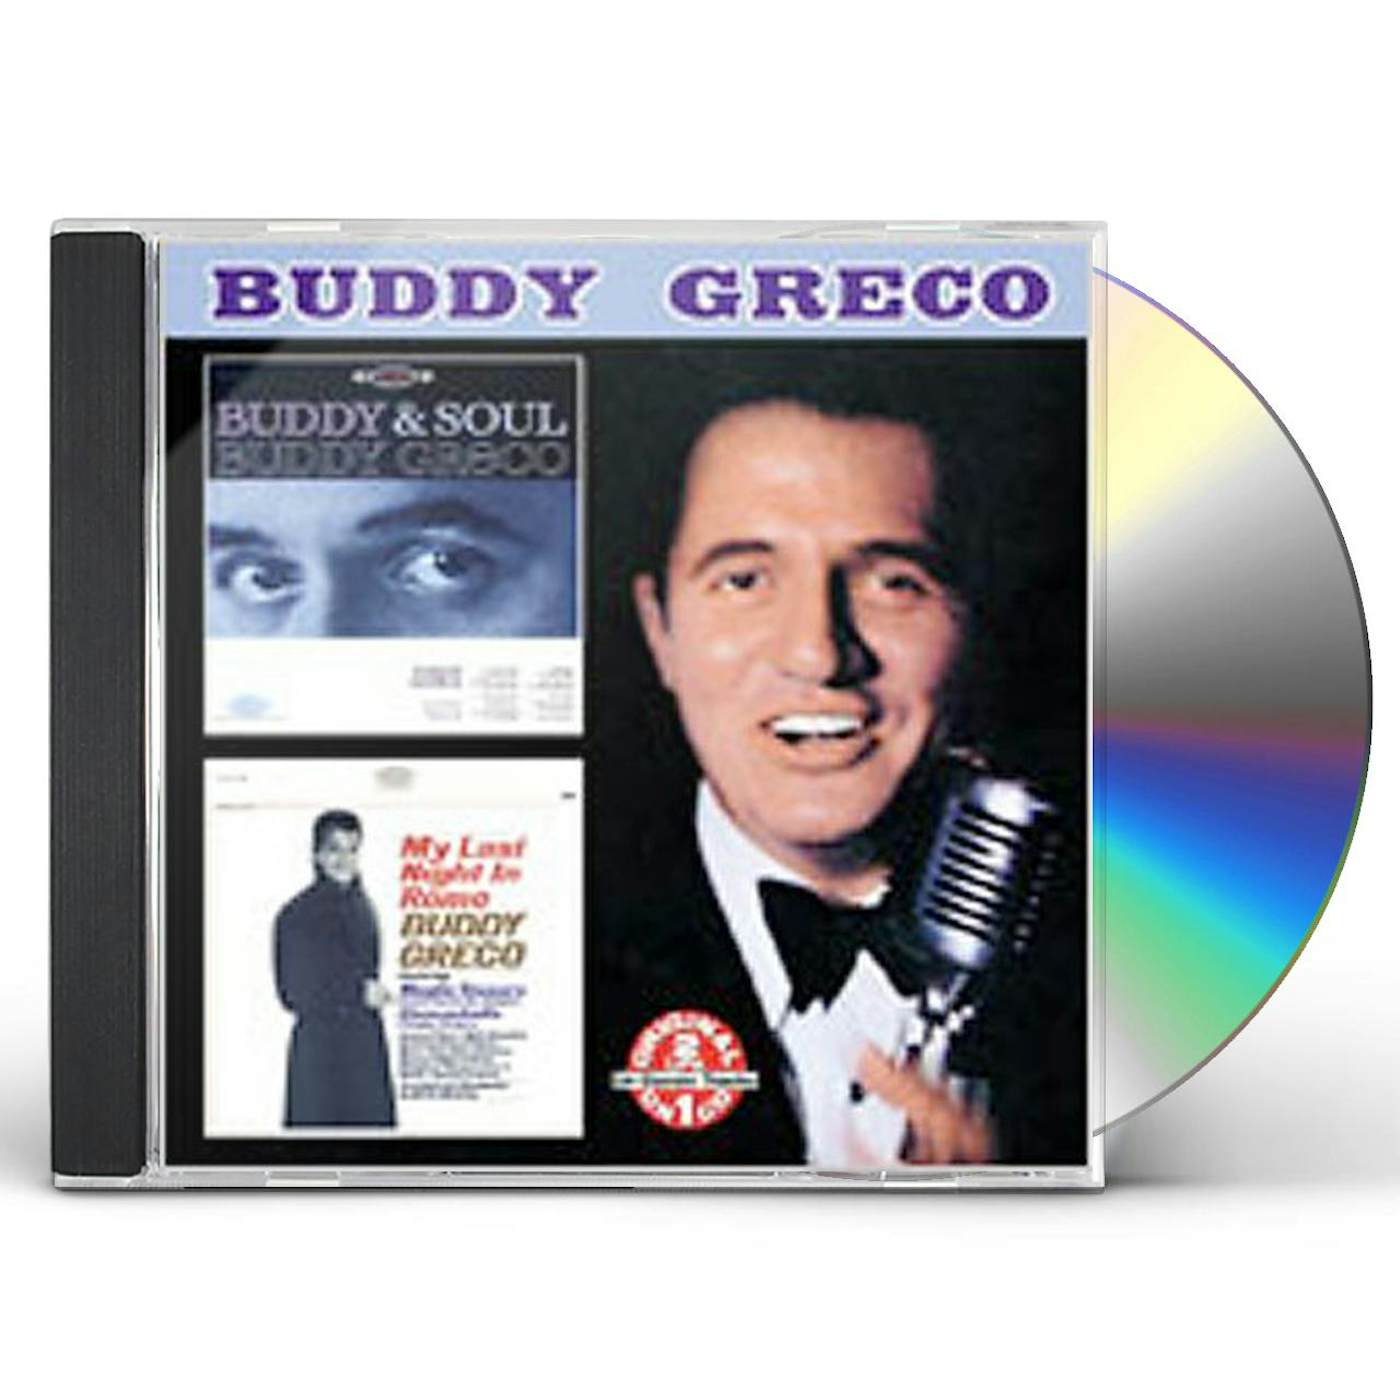 Buddy Greco BUDDY & SOUL / MY LAST NIGHT IN ROME CD